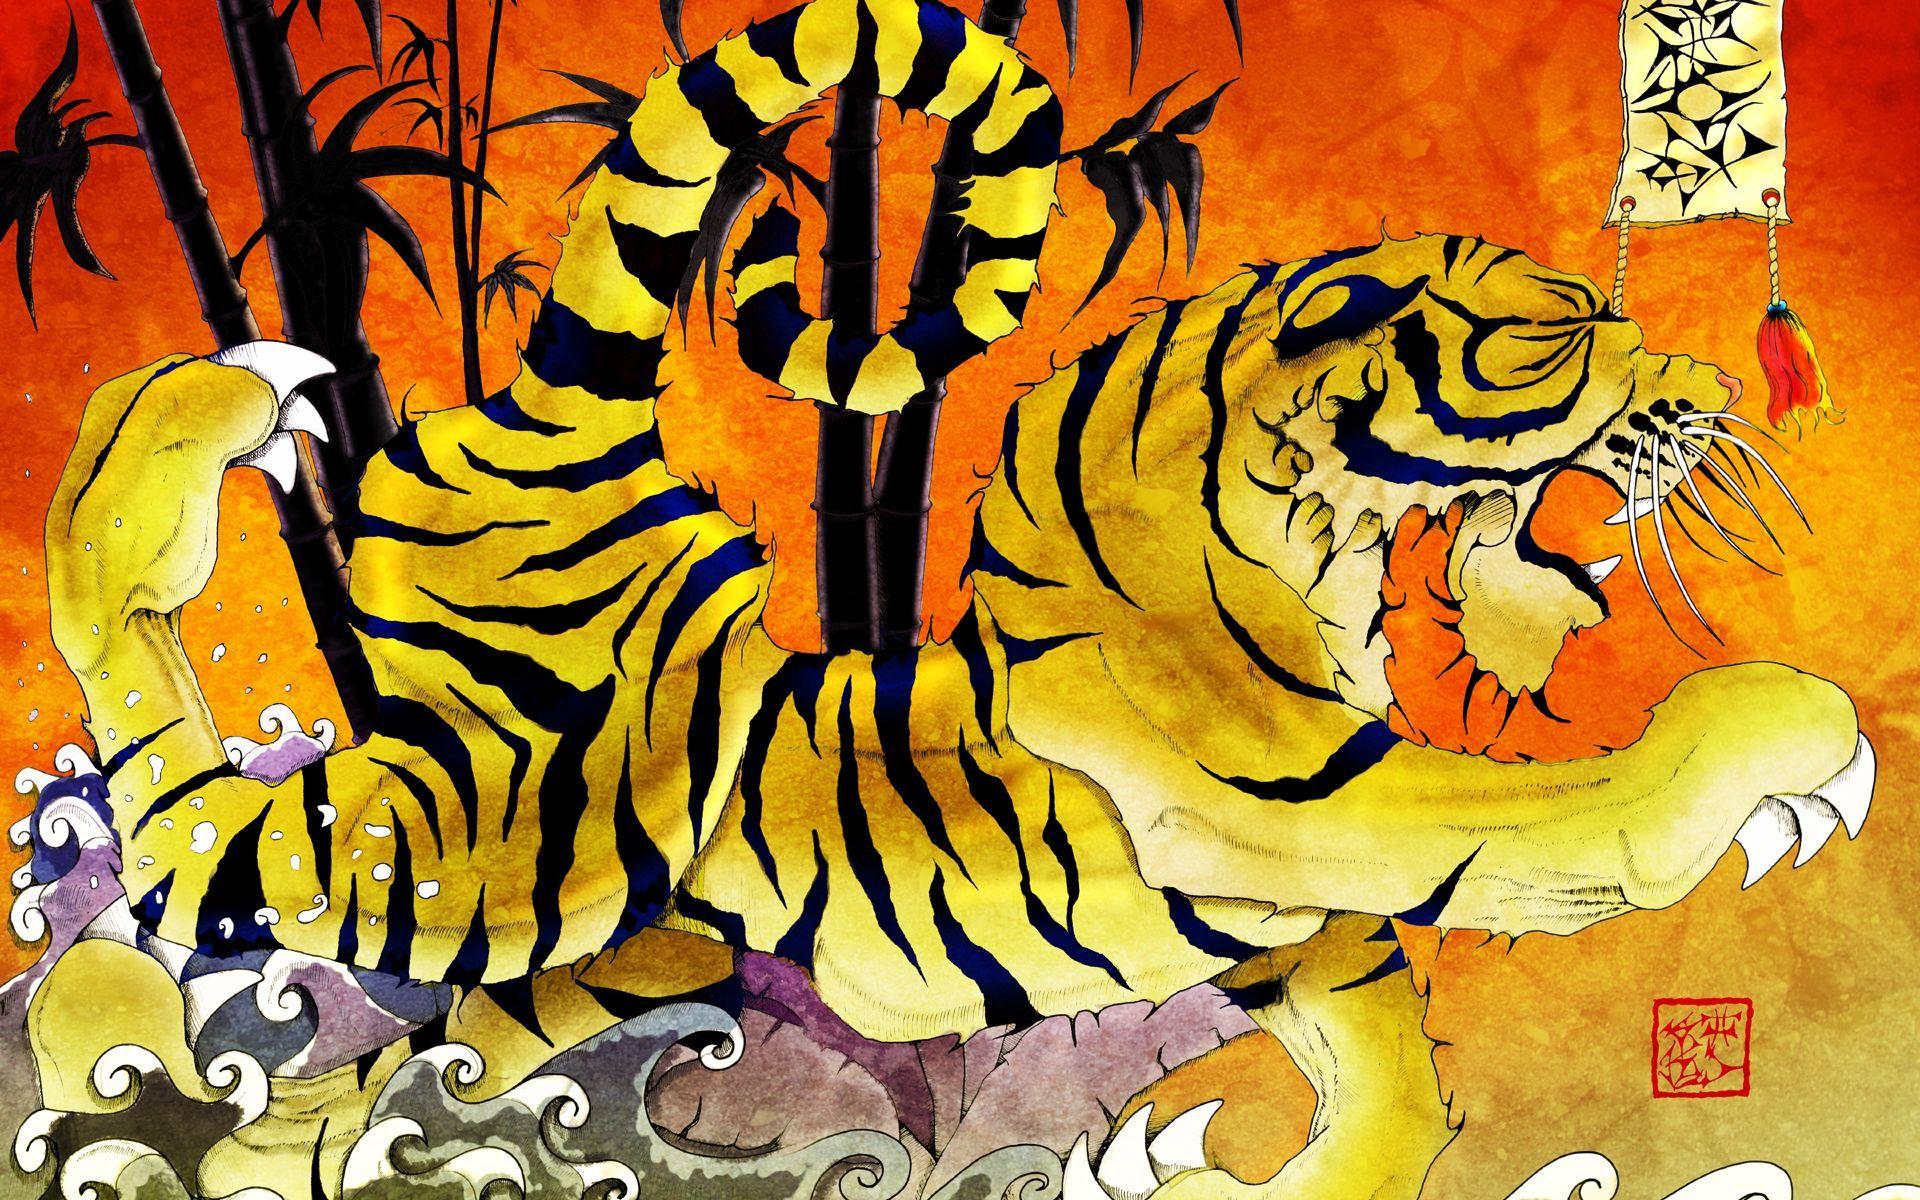 Art Tiger Tattoo Wallpapers - Top Free Art Tiger Tattoo Backgrounds -  WallpaperAccess